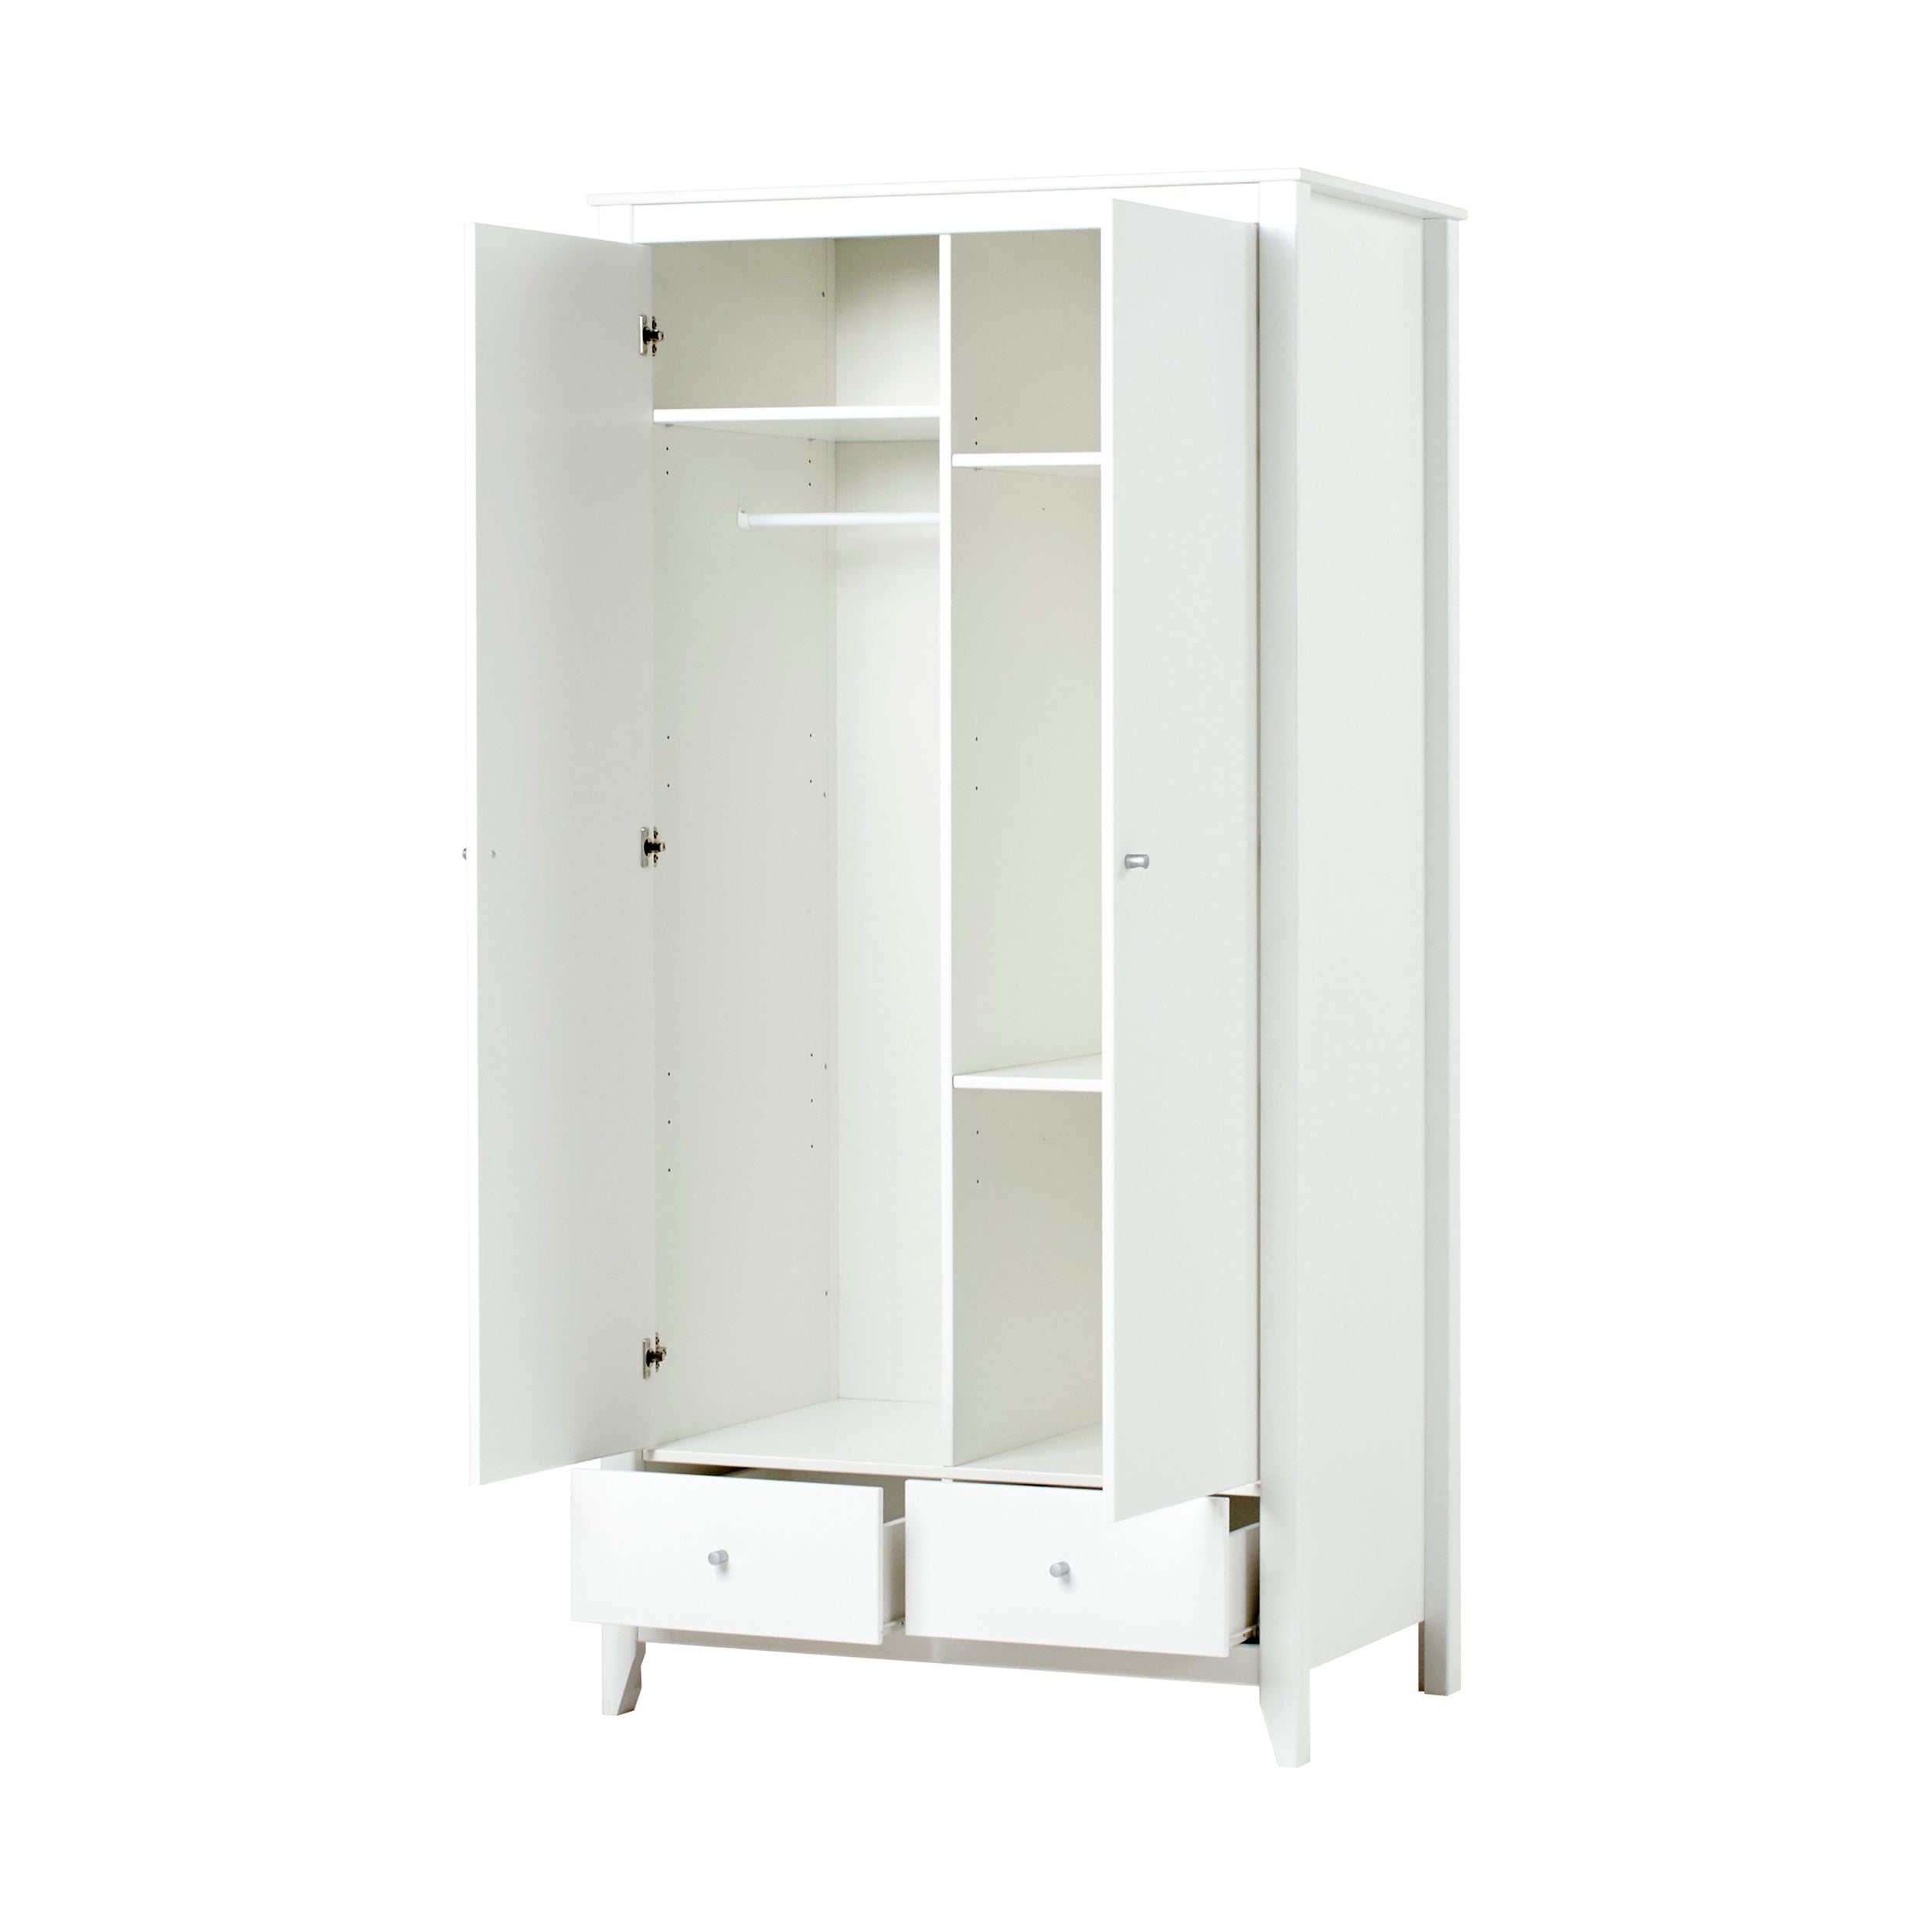 Hoppekids wardrobe with 2 doors and 2 drawers, White